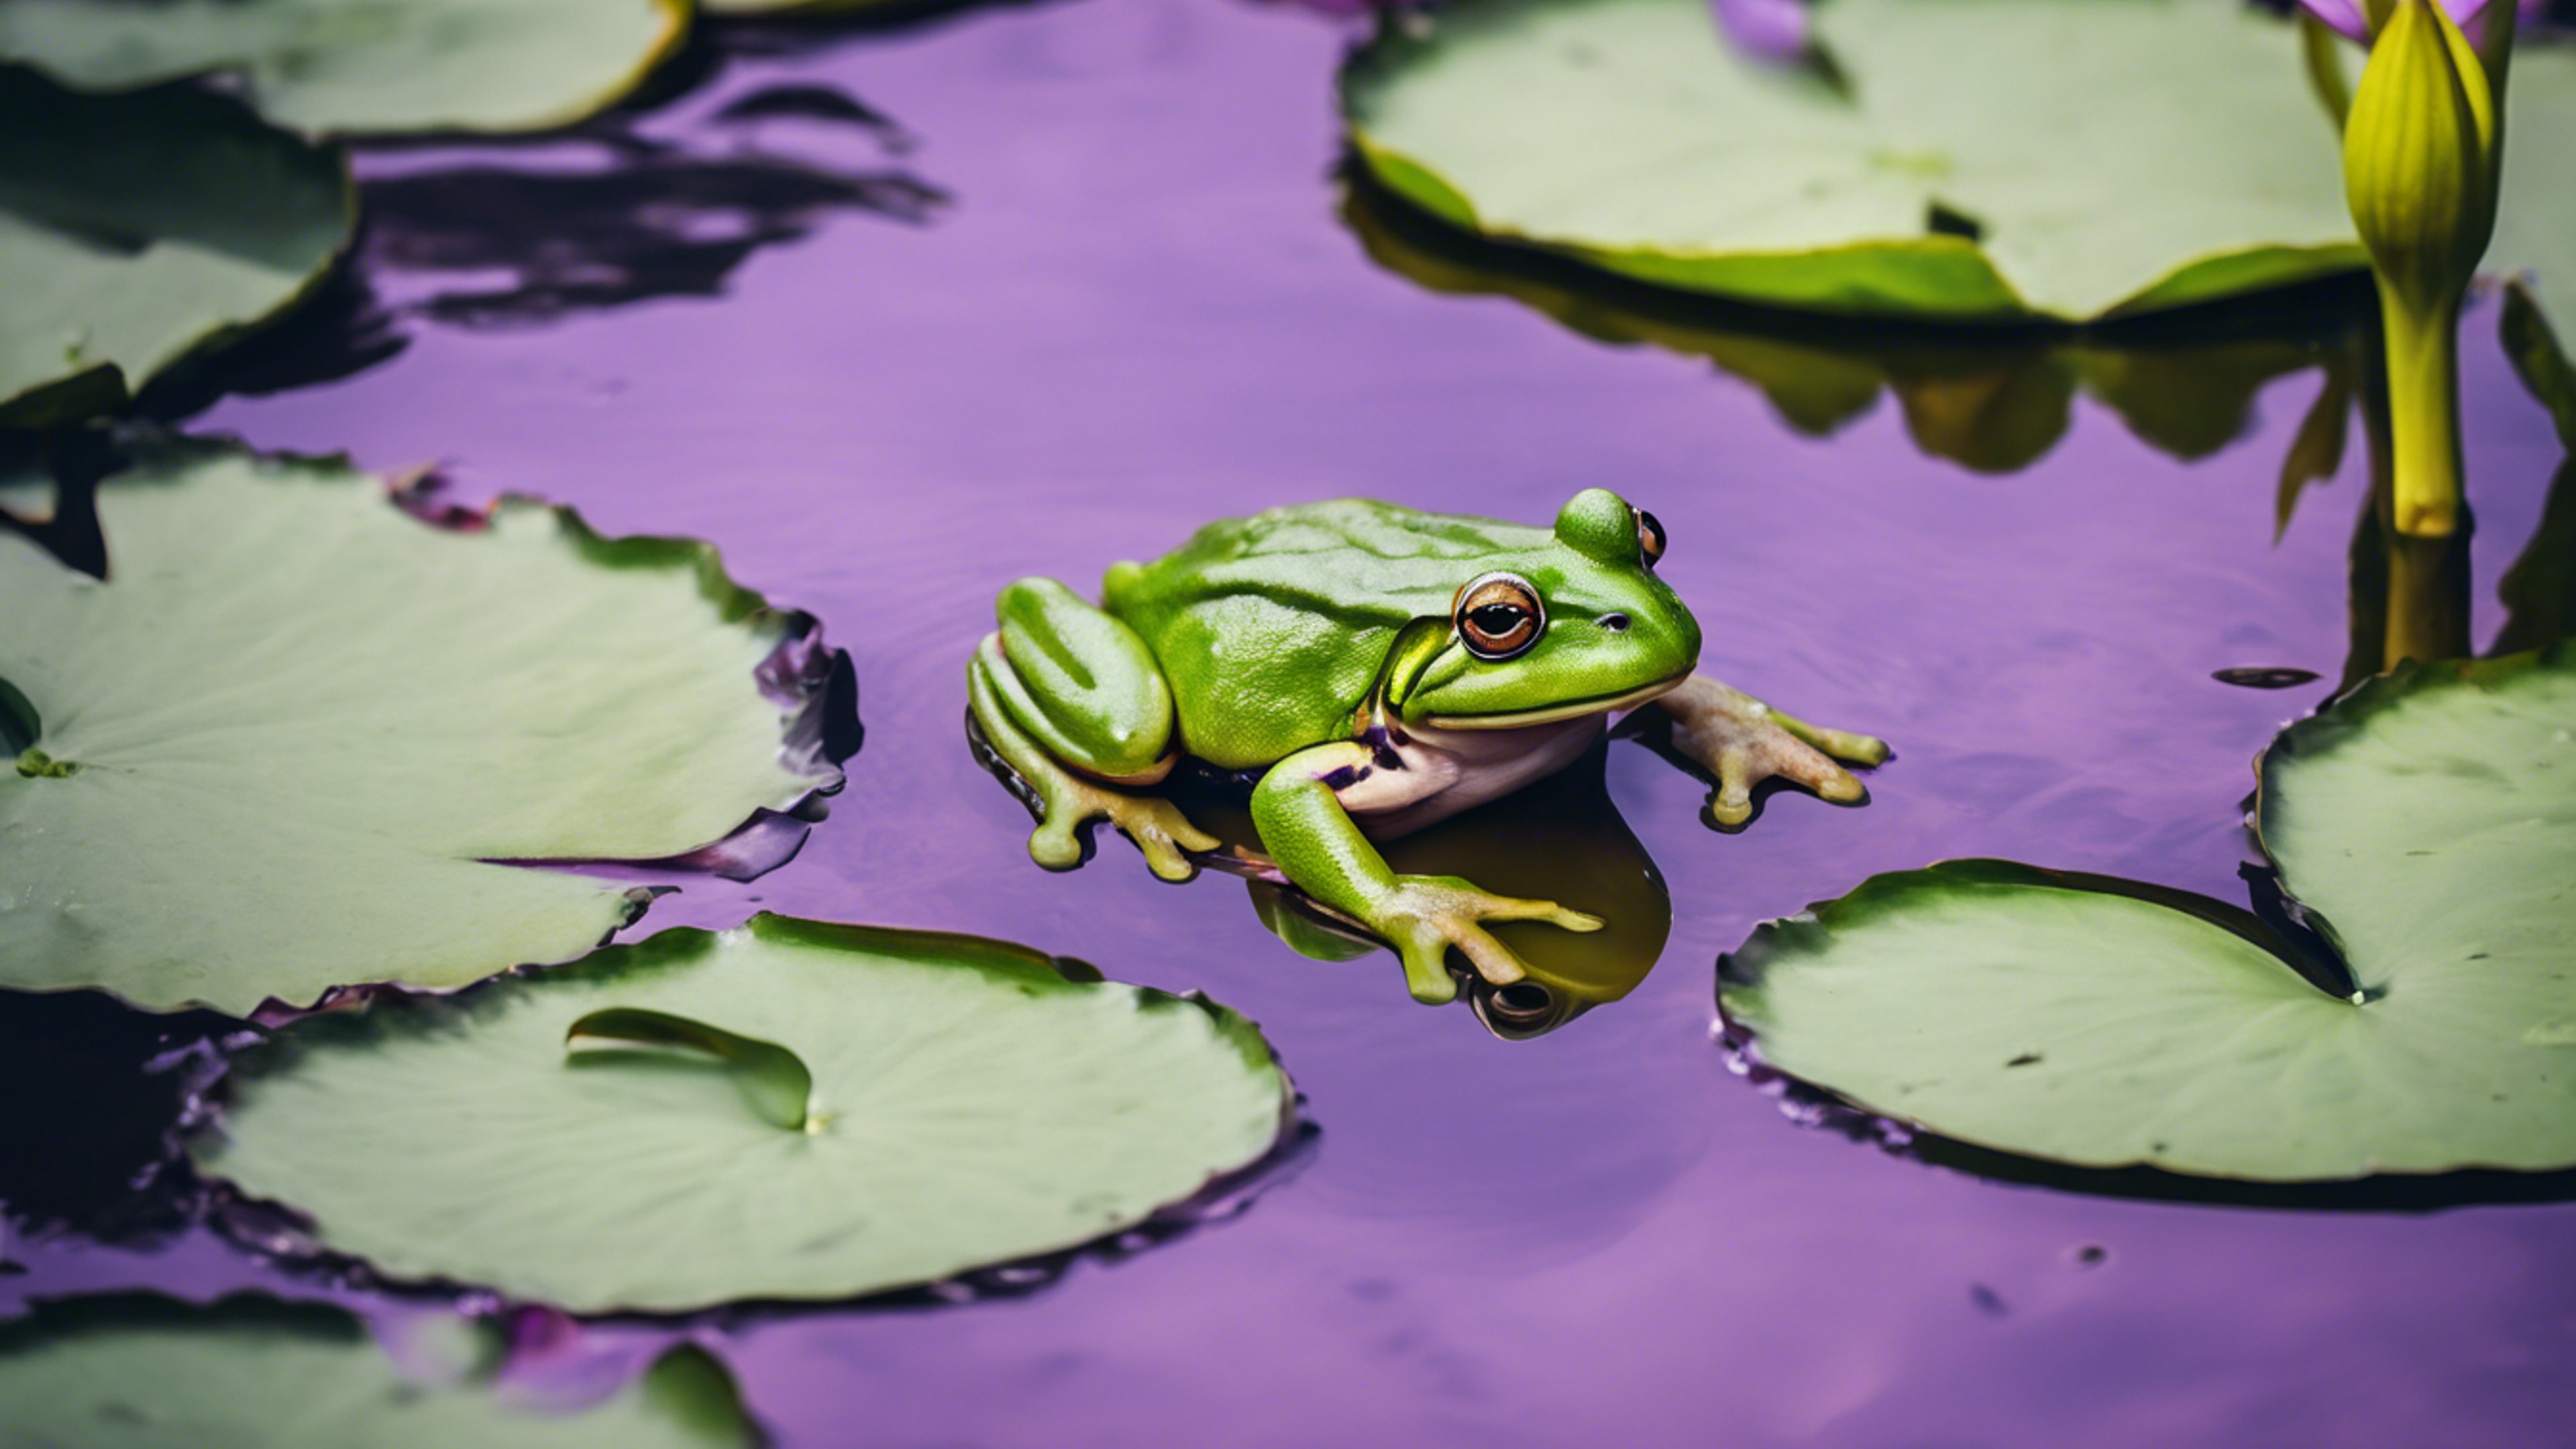 A green frog sitting on a lily pad in a pond with purple water lilies. duvar kağıdı[d22beb1d3ca84401a5ac]